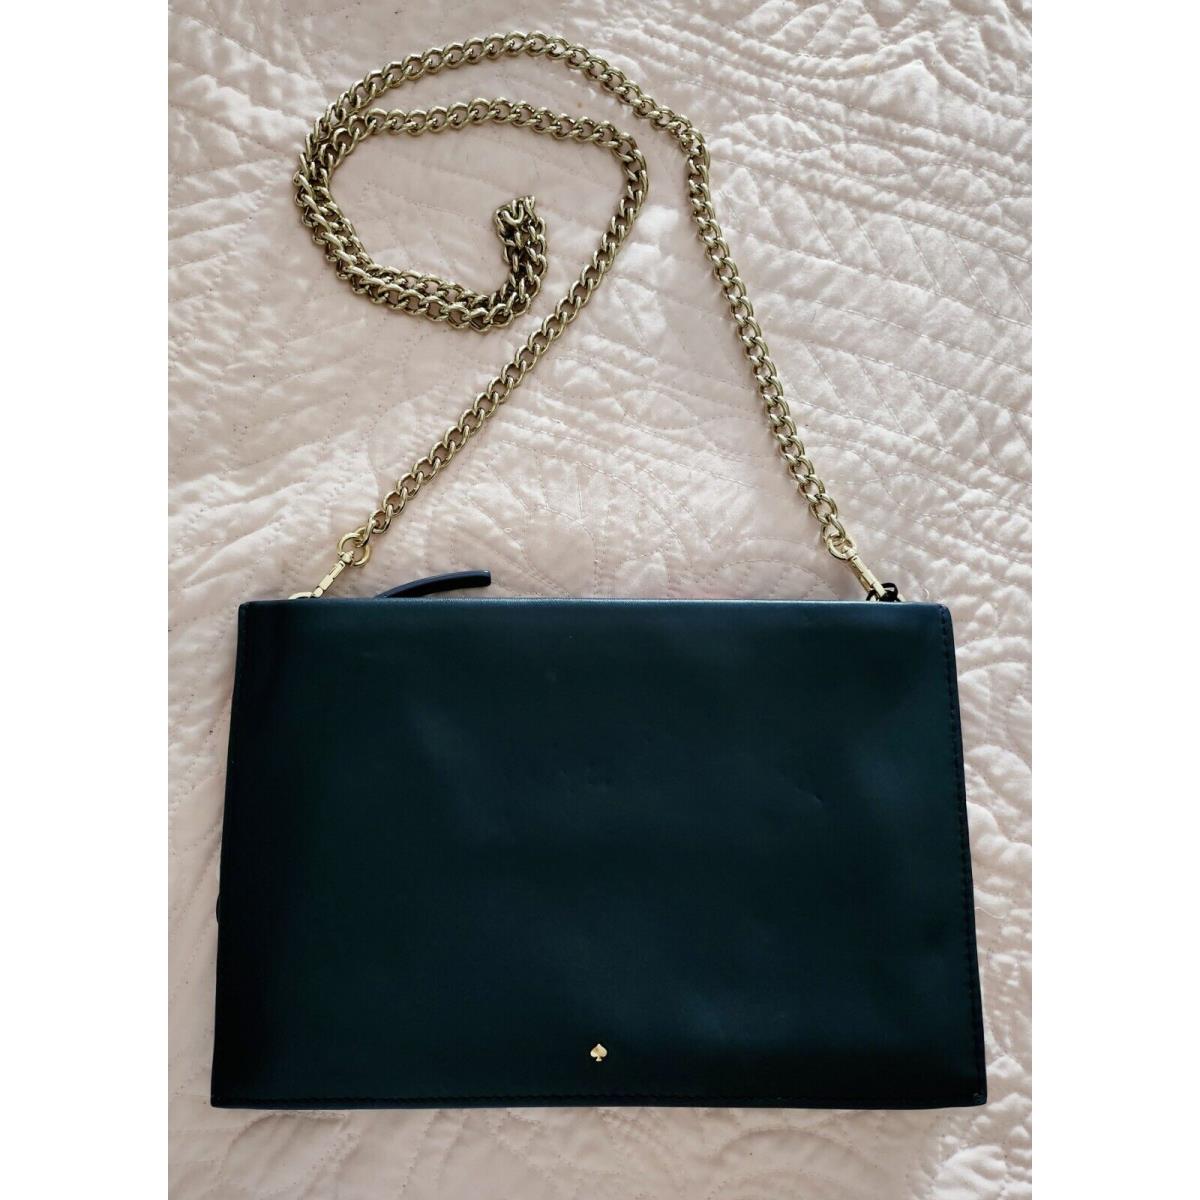 Kate Spade  bag  Sima - Gold Handle/Strap, Gold Hardware, Blazerblmu (412) Manufacturer : 1